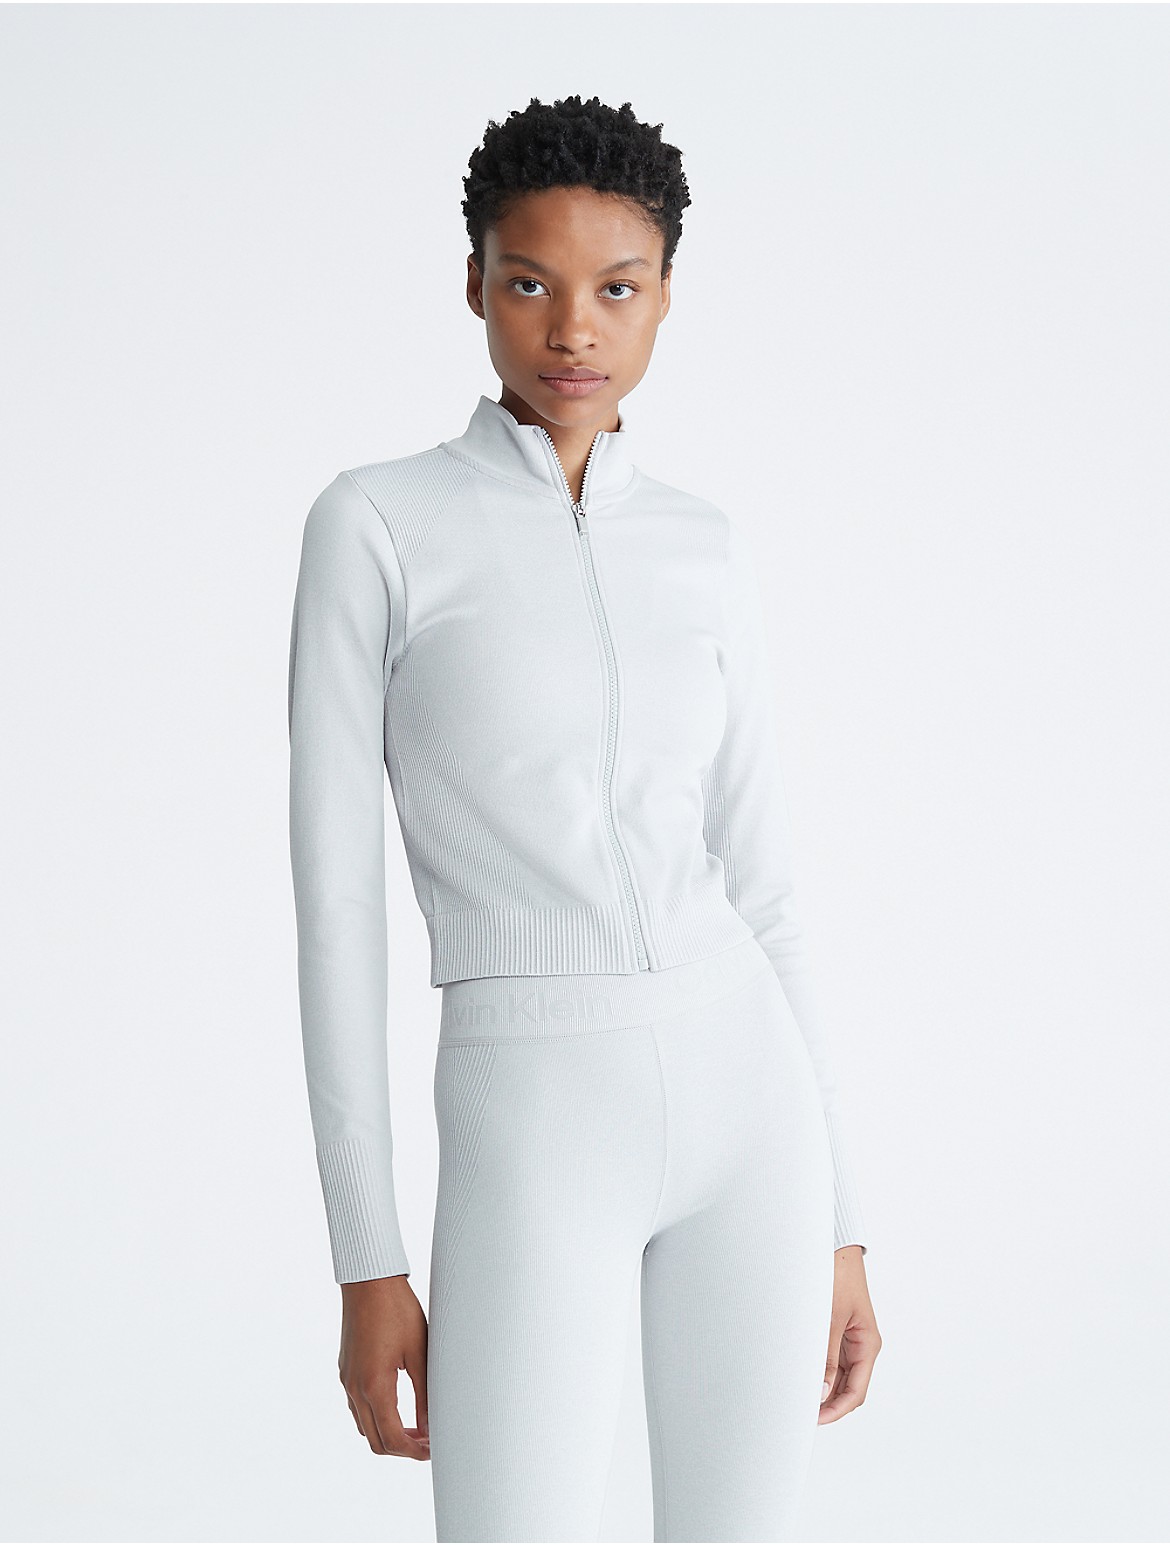 Calvin Klein Women's Performance Seamless Mock Neck Jacket - White - L